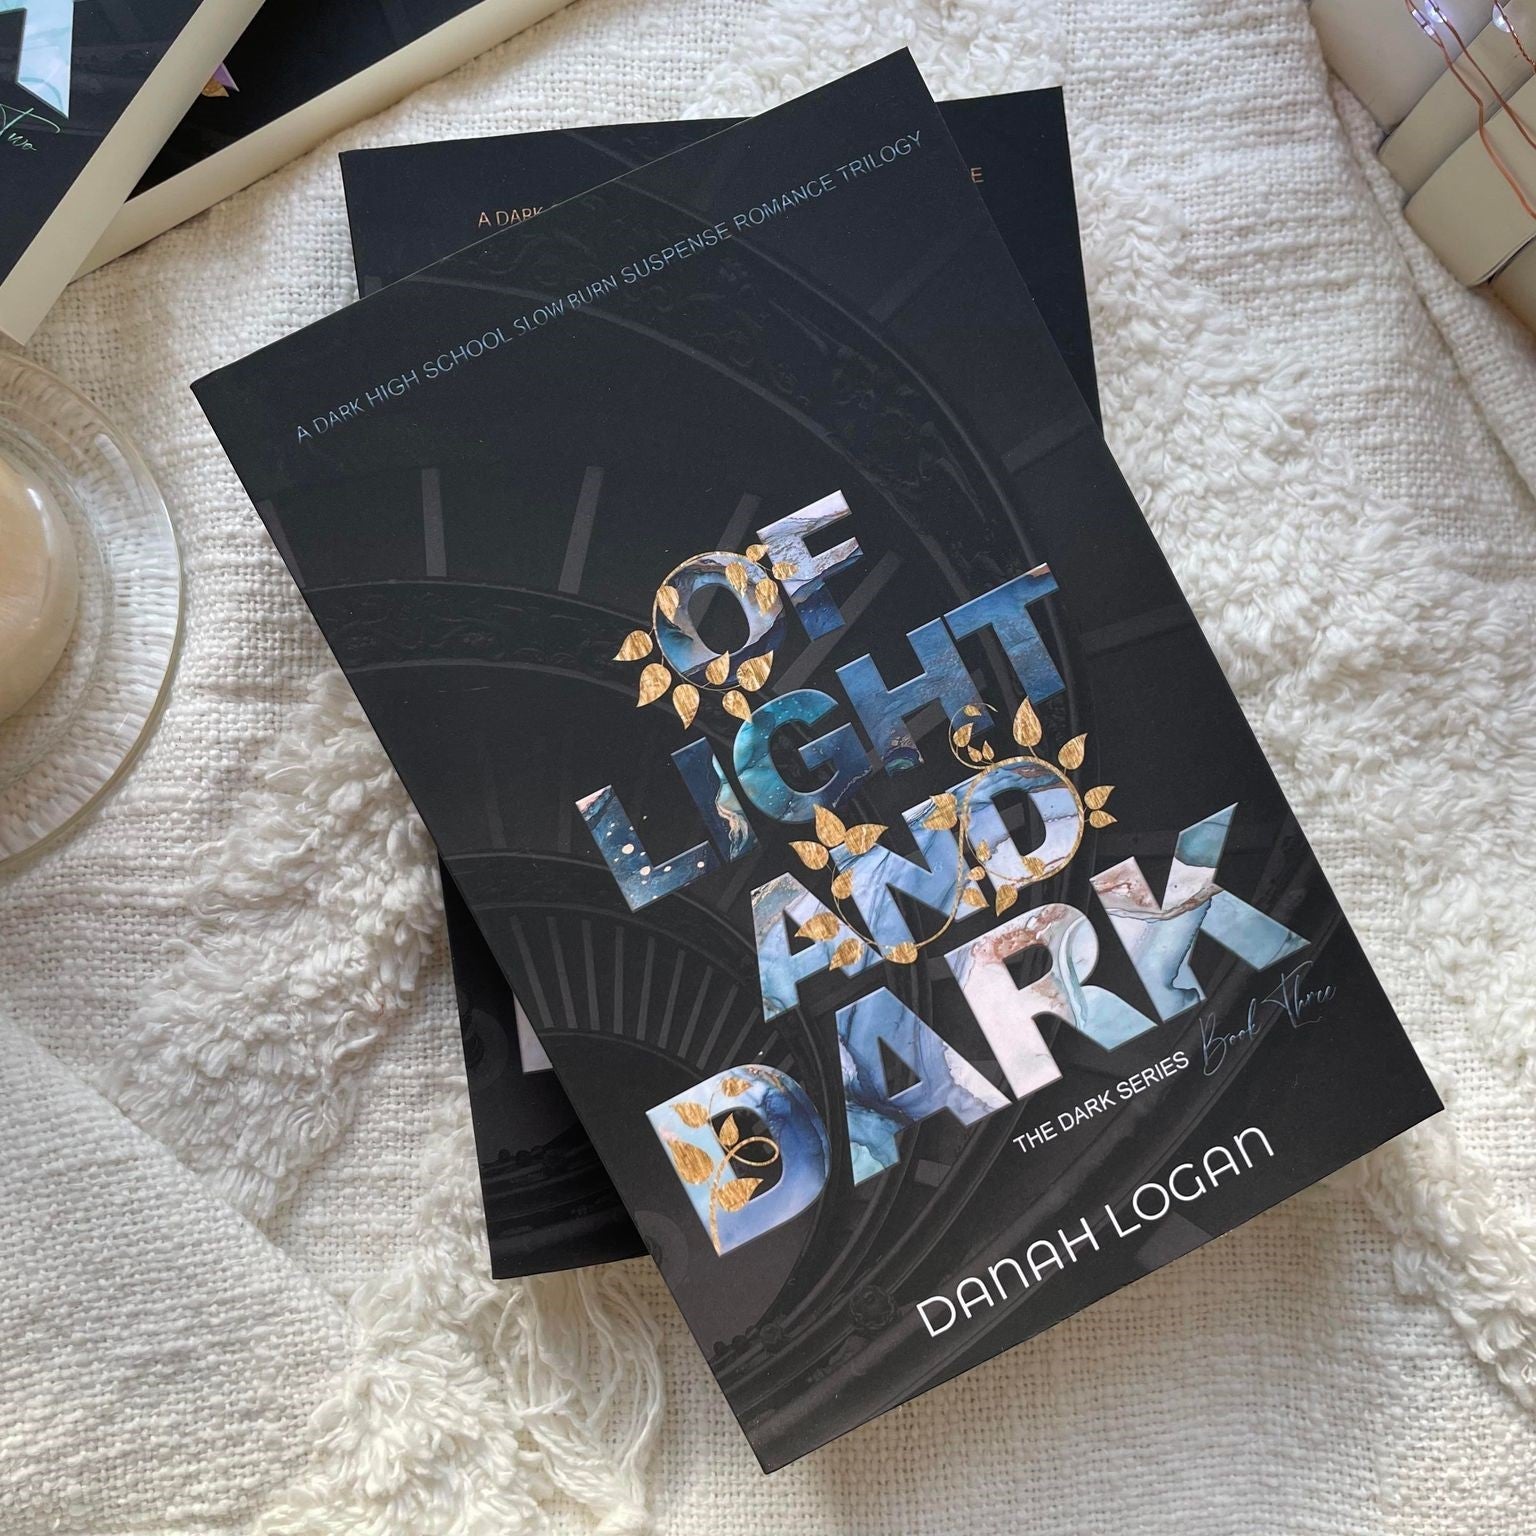 The Dark series by Danah Logan